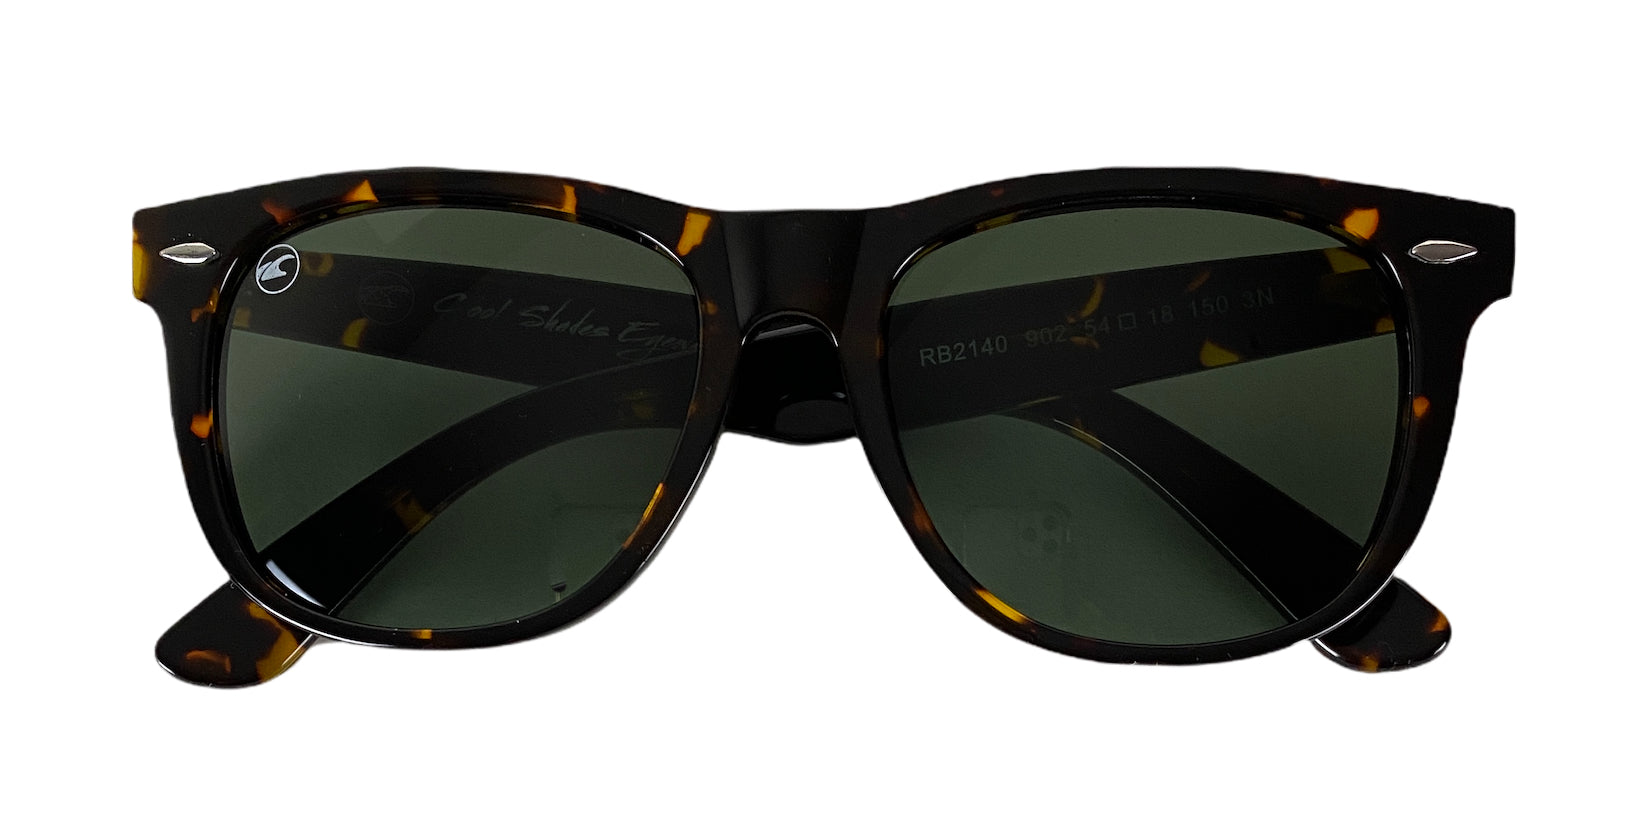 Kaslo Unisex Sunglasses, Classic styling